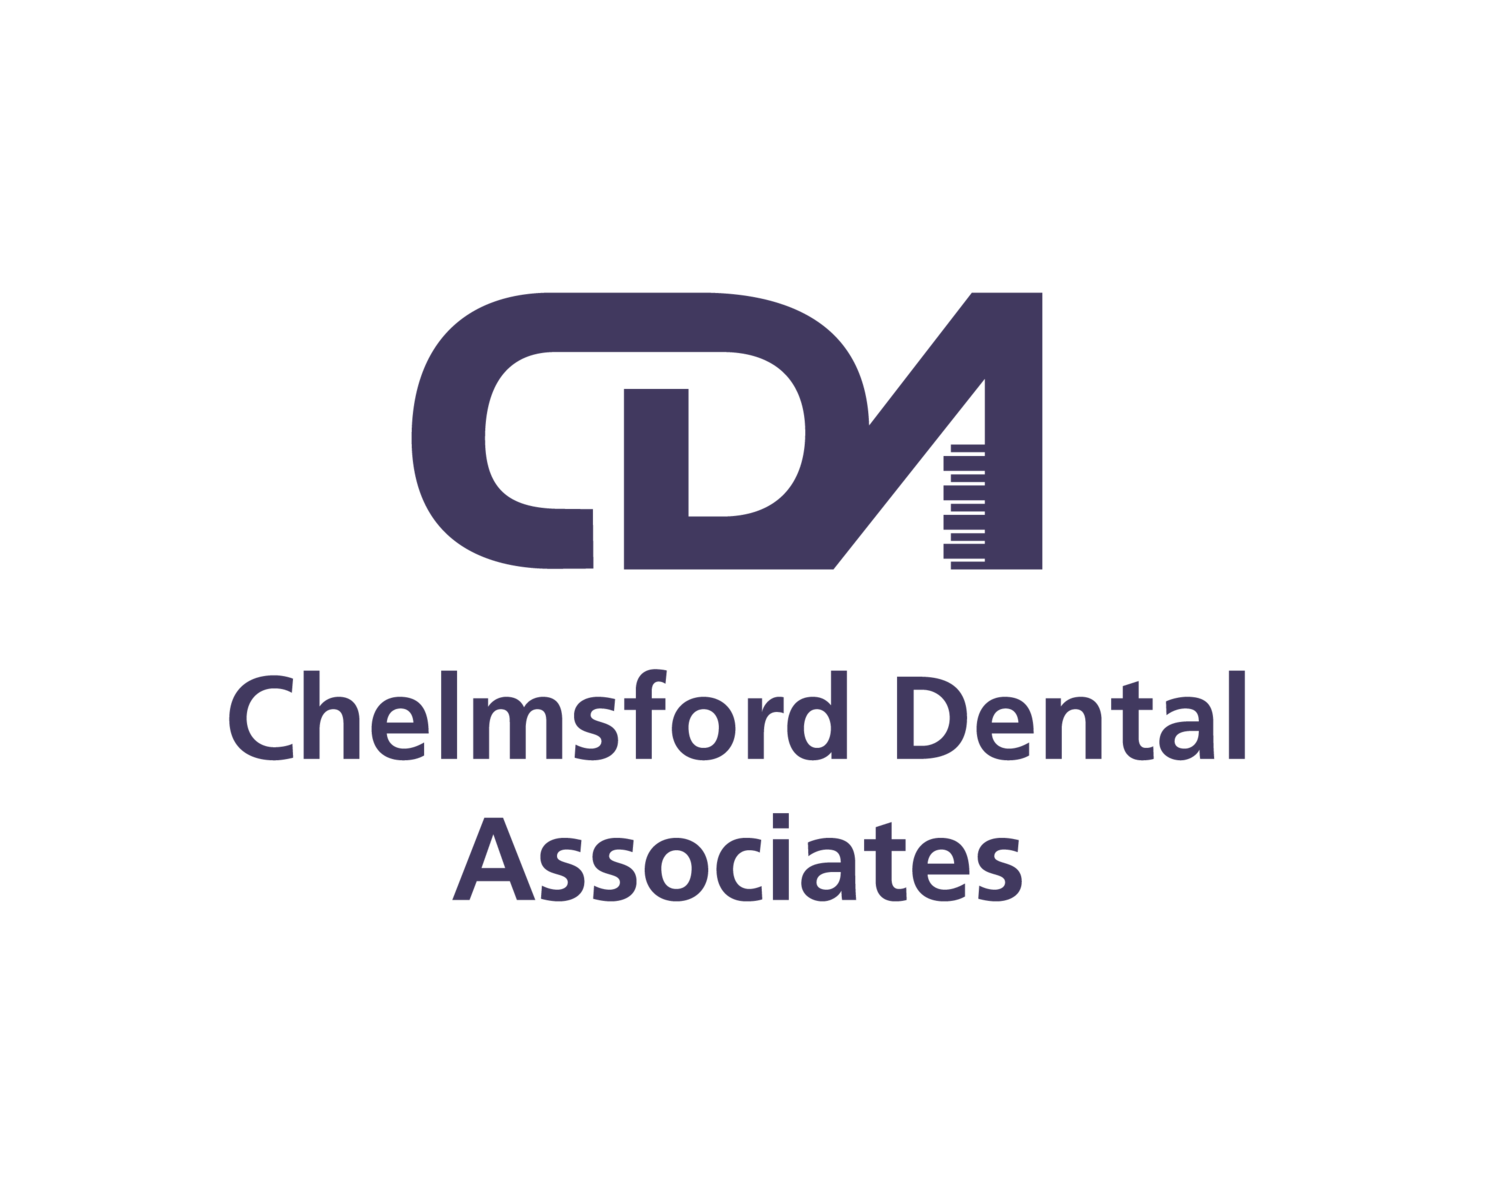 Chelmsford Dental Associates